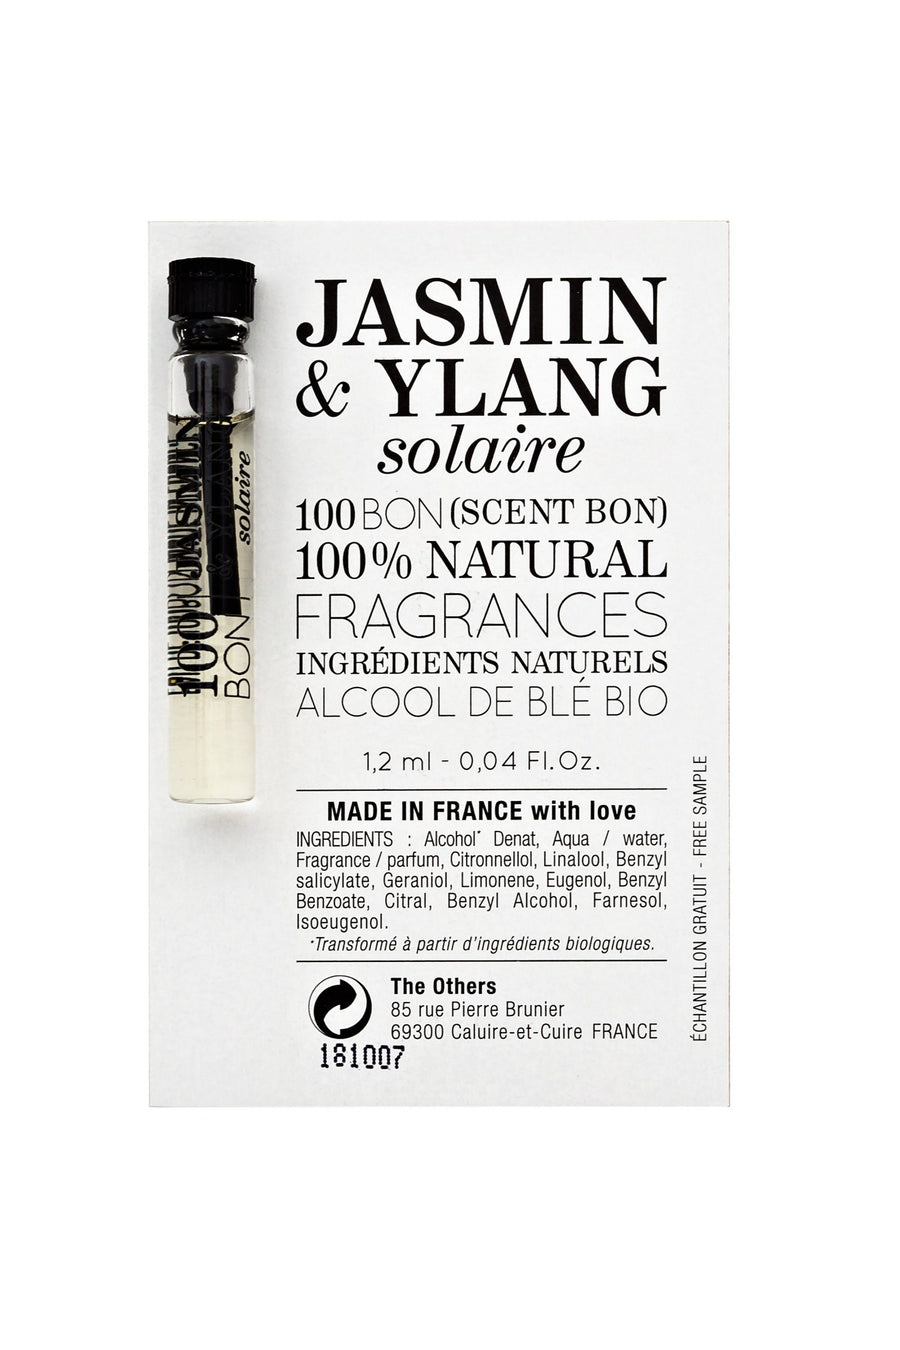 Jasmin & Ylang solaire 1,2ml